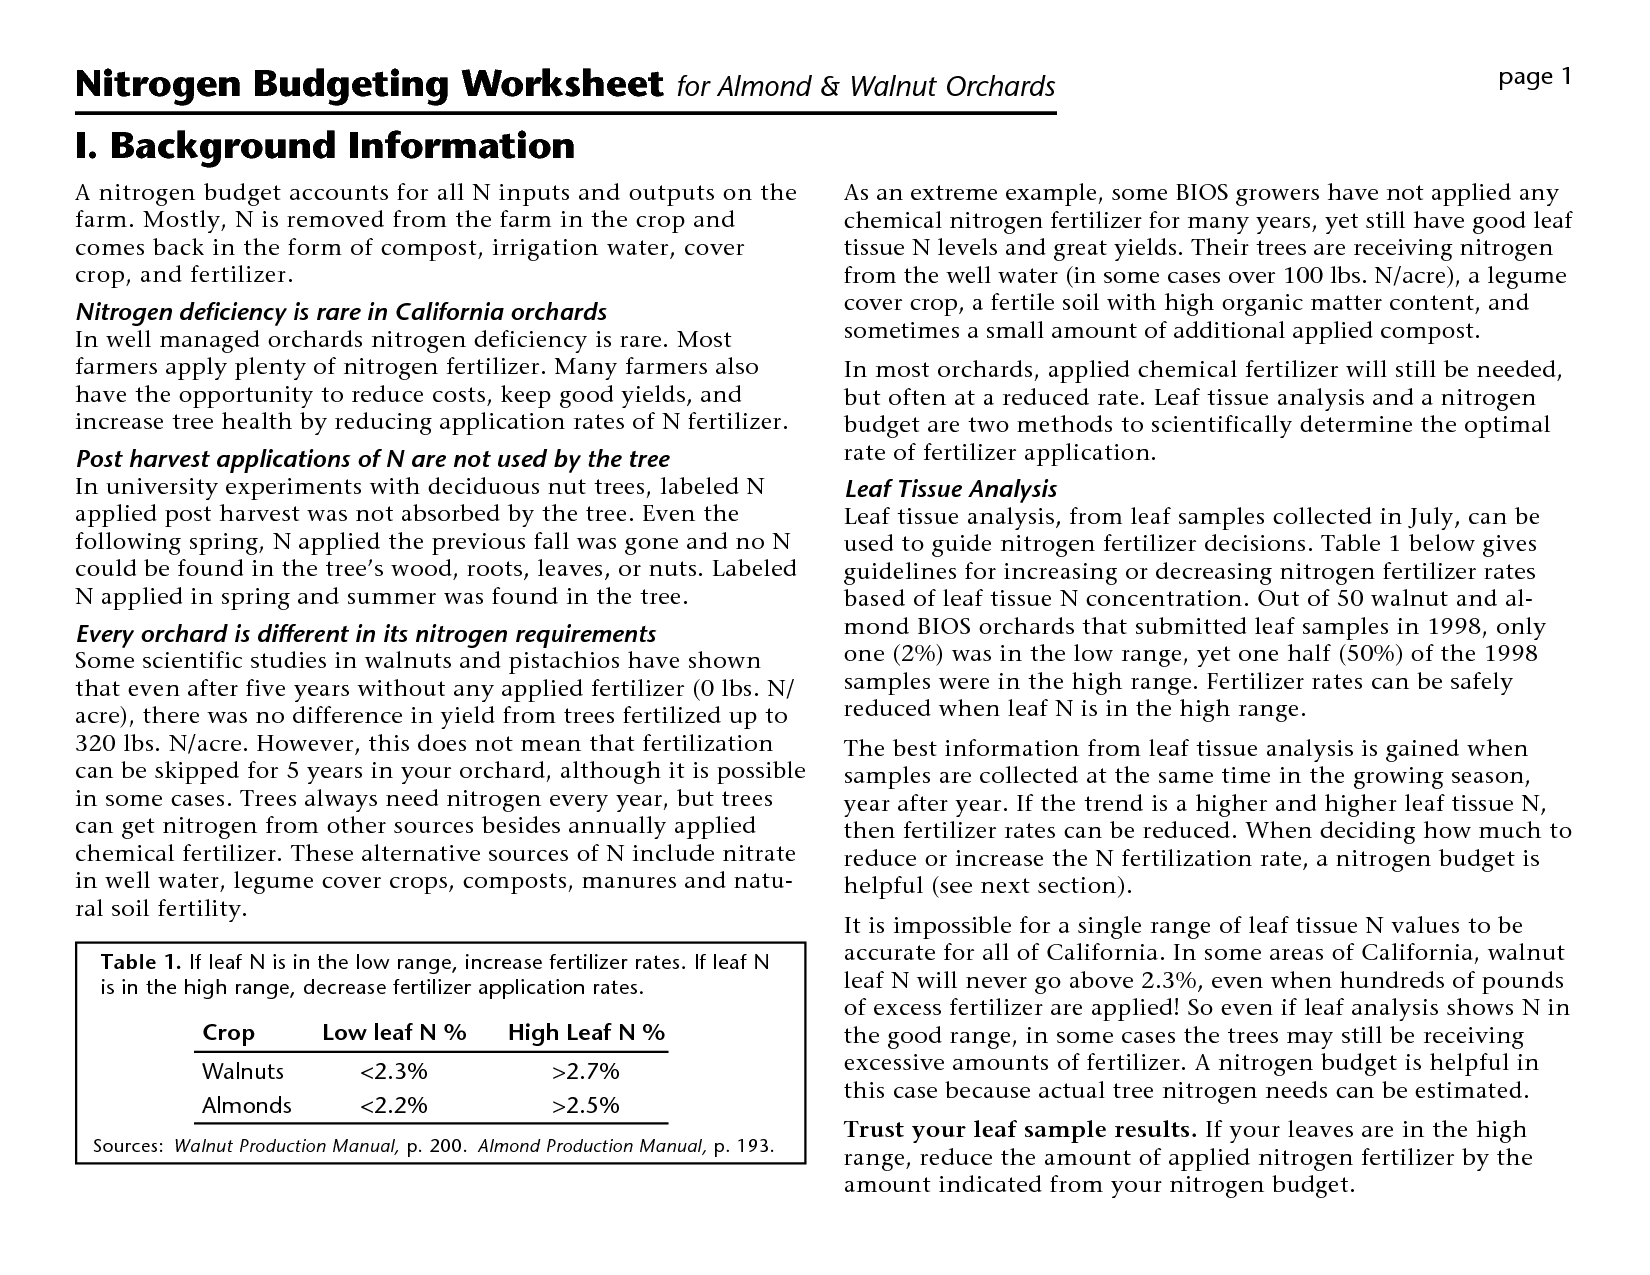 Nitrogen Cycle Worksheet High School